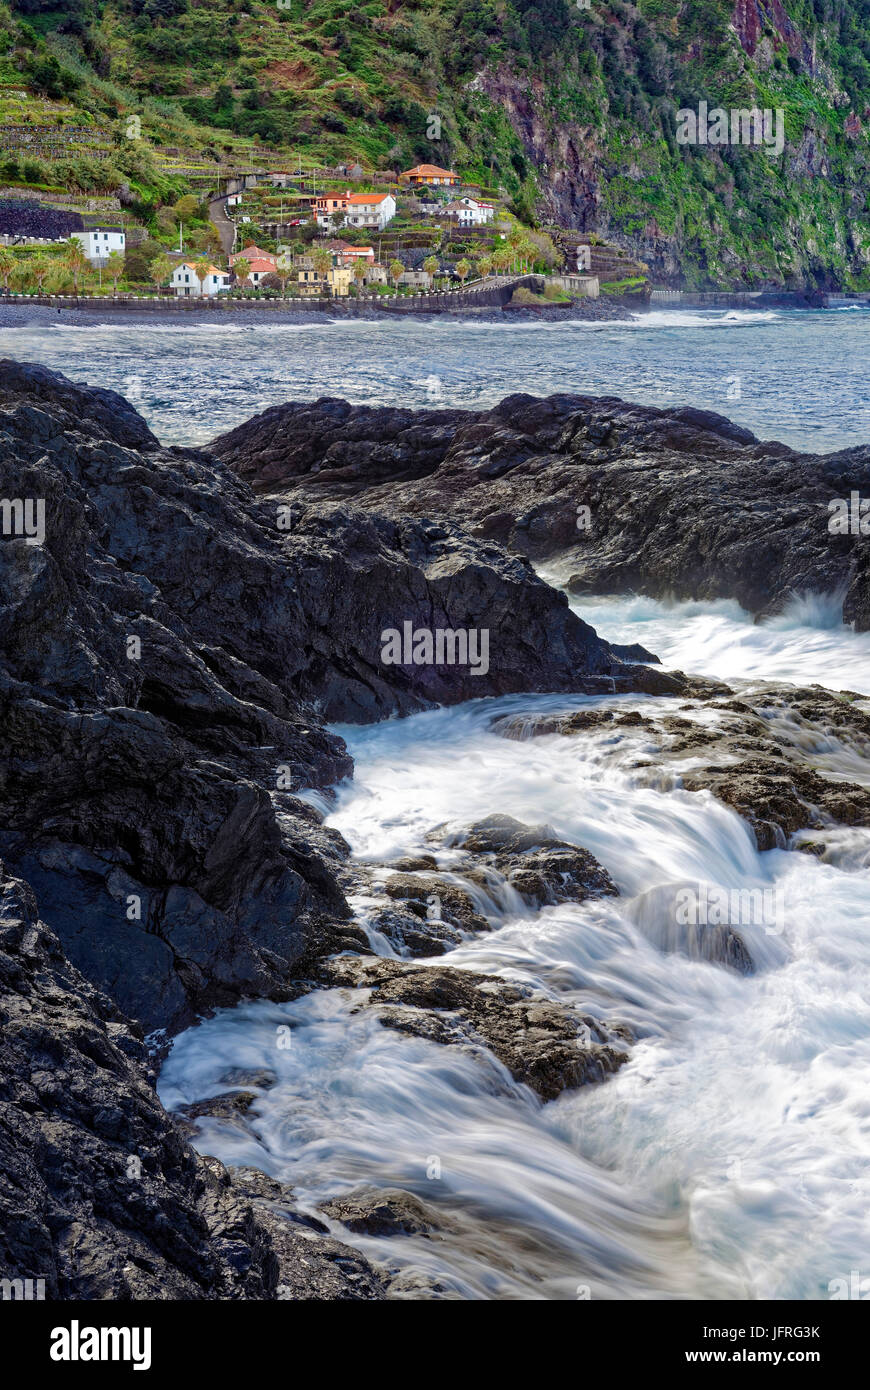 A view along the rocky coastline of Seixal, Porto Moniz, Madeira, Portugal Stock Photo